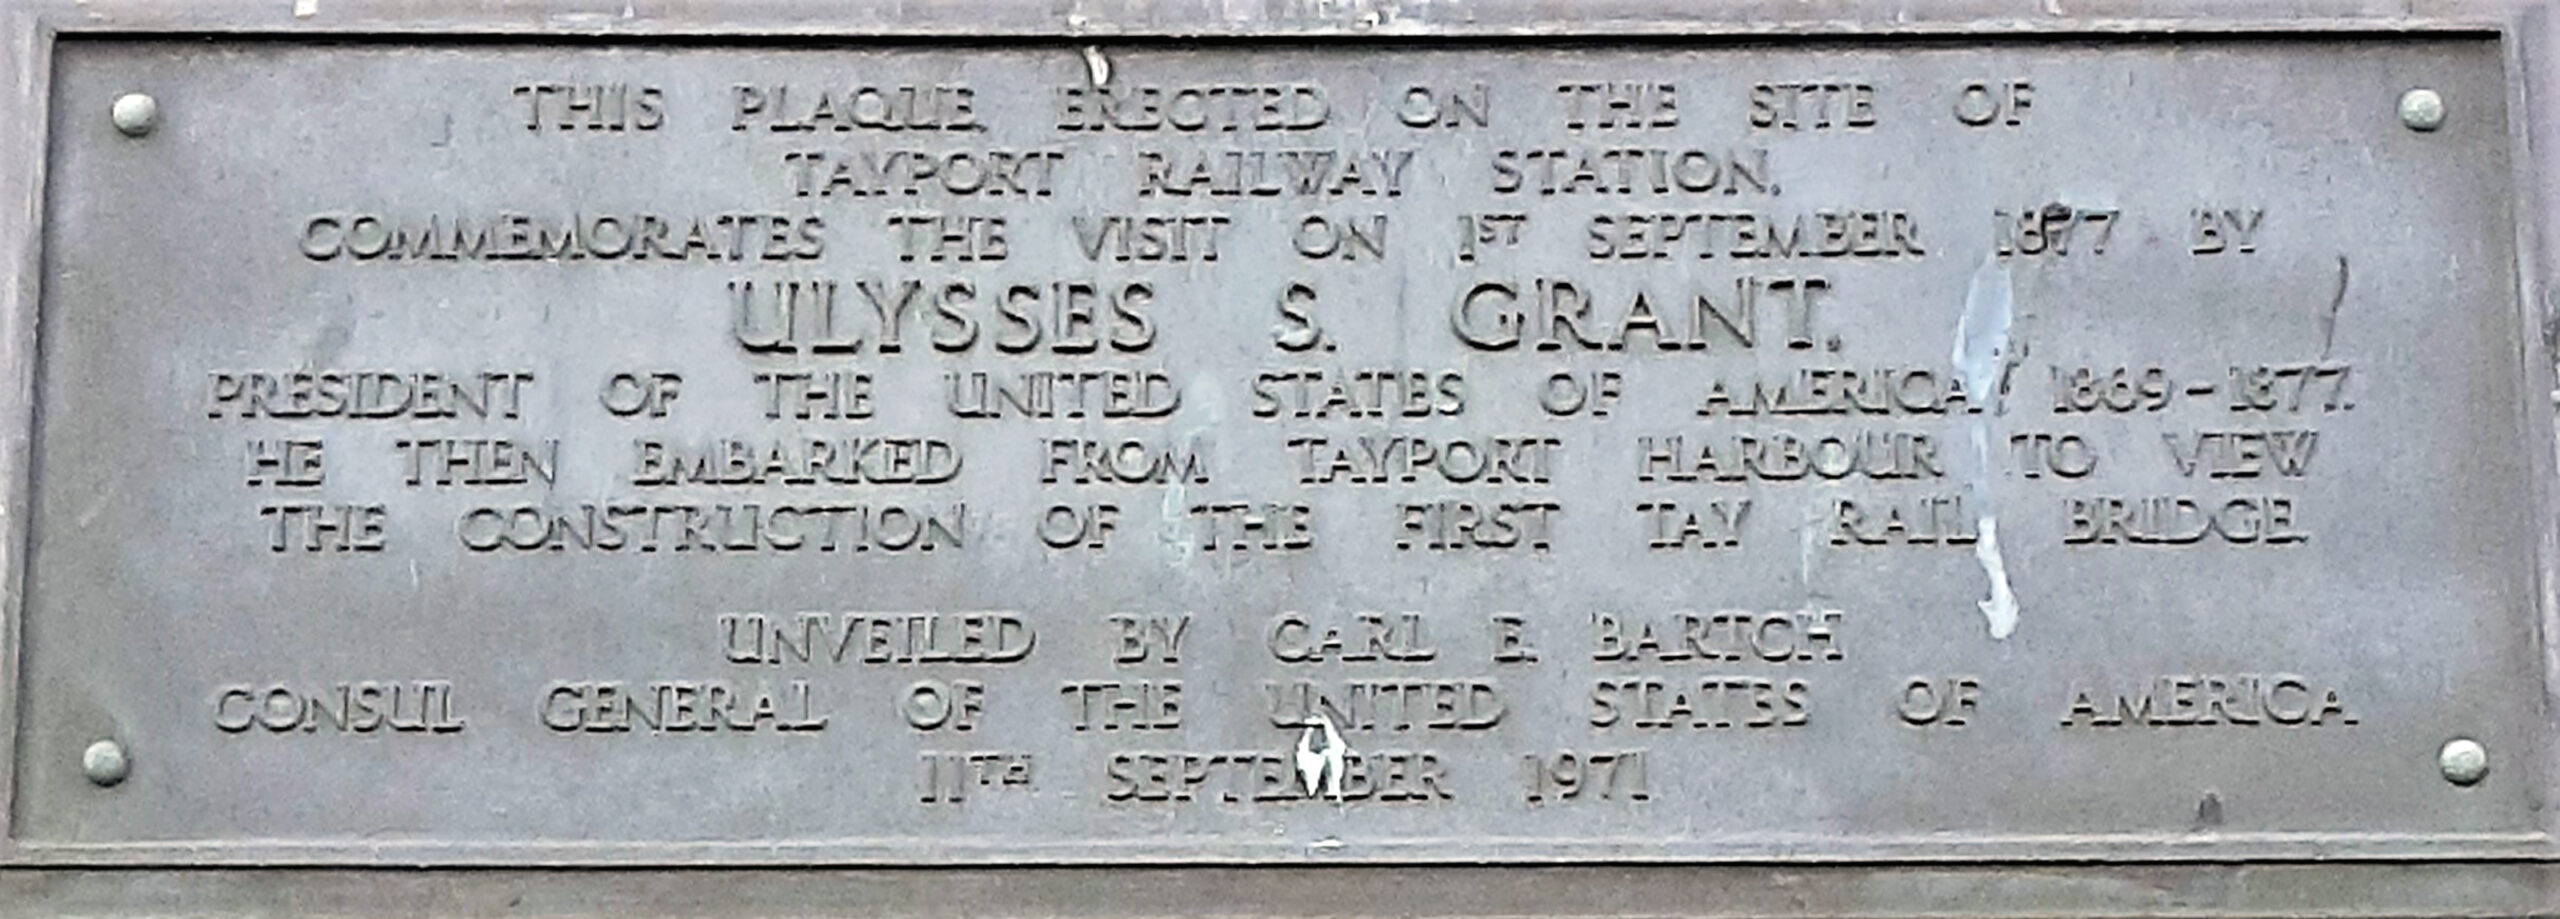 Tayport Heritage Trail - Board 1 - Plaque recording visit of U.G. 1877